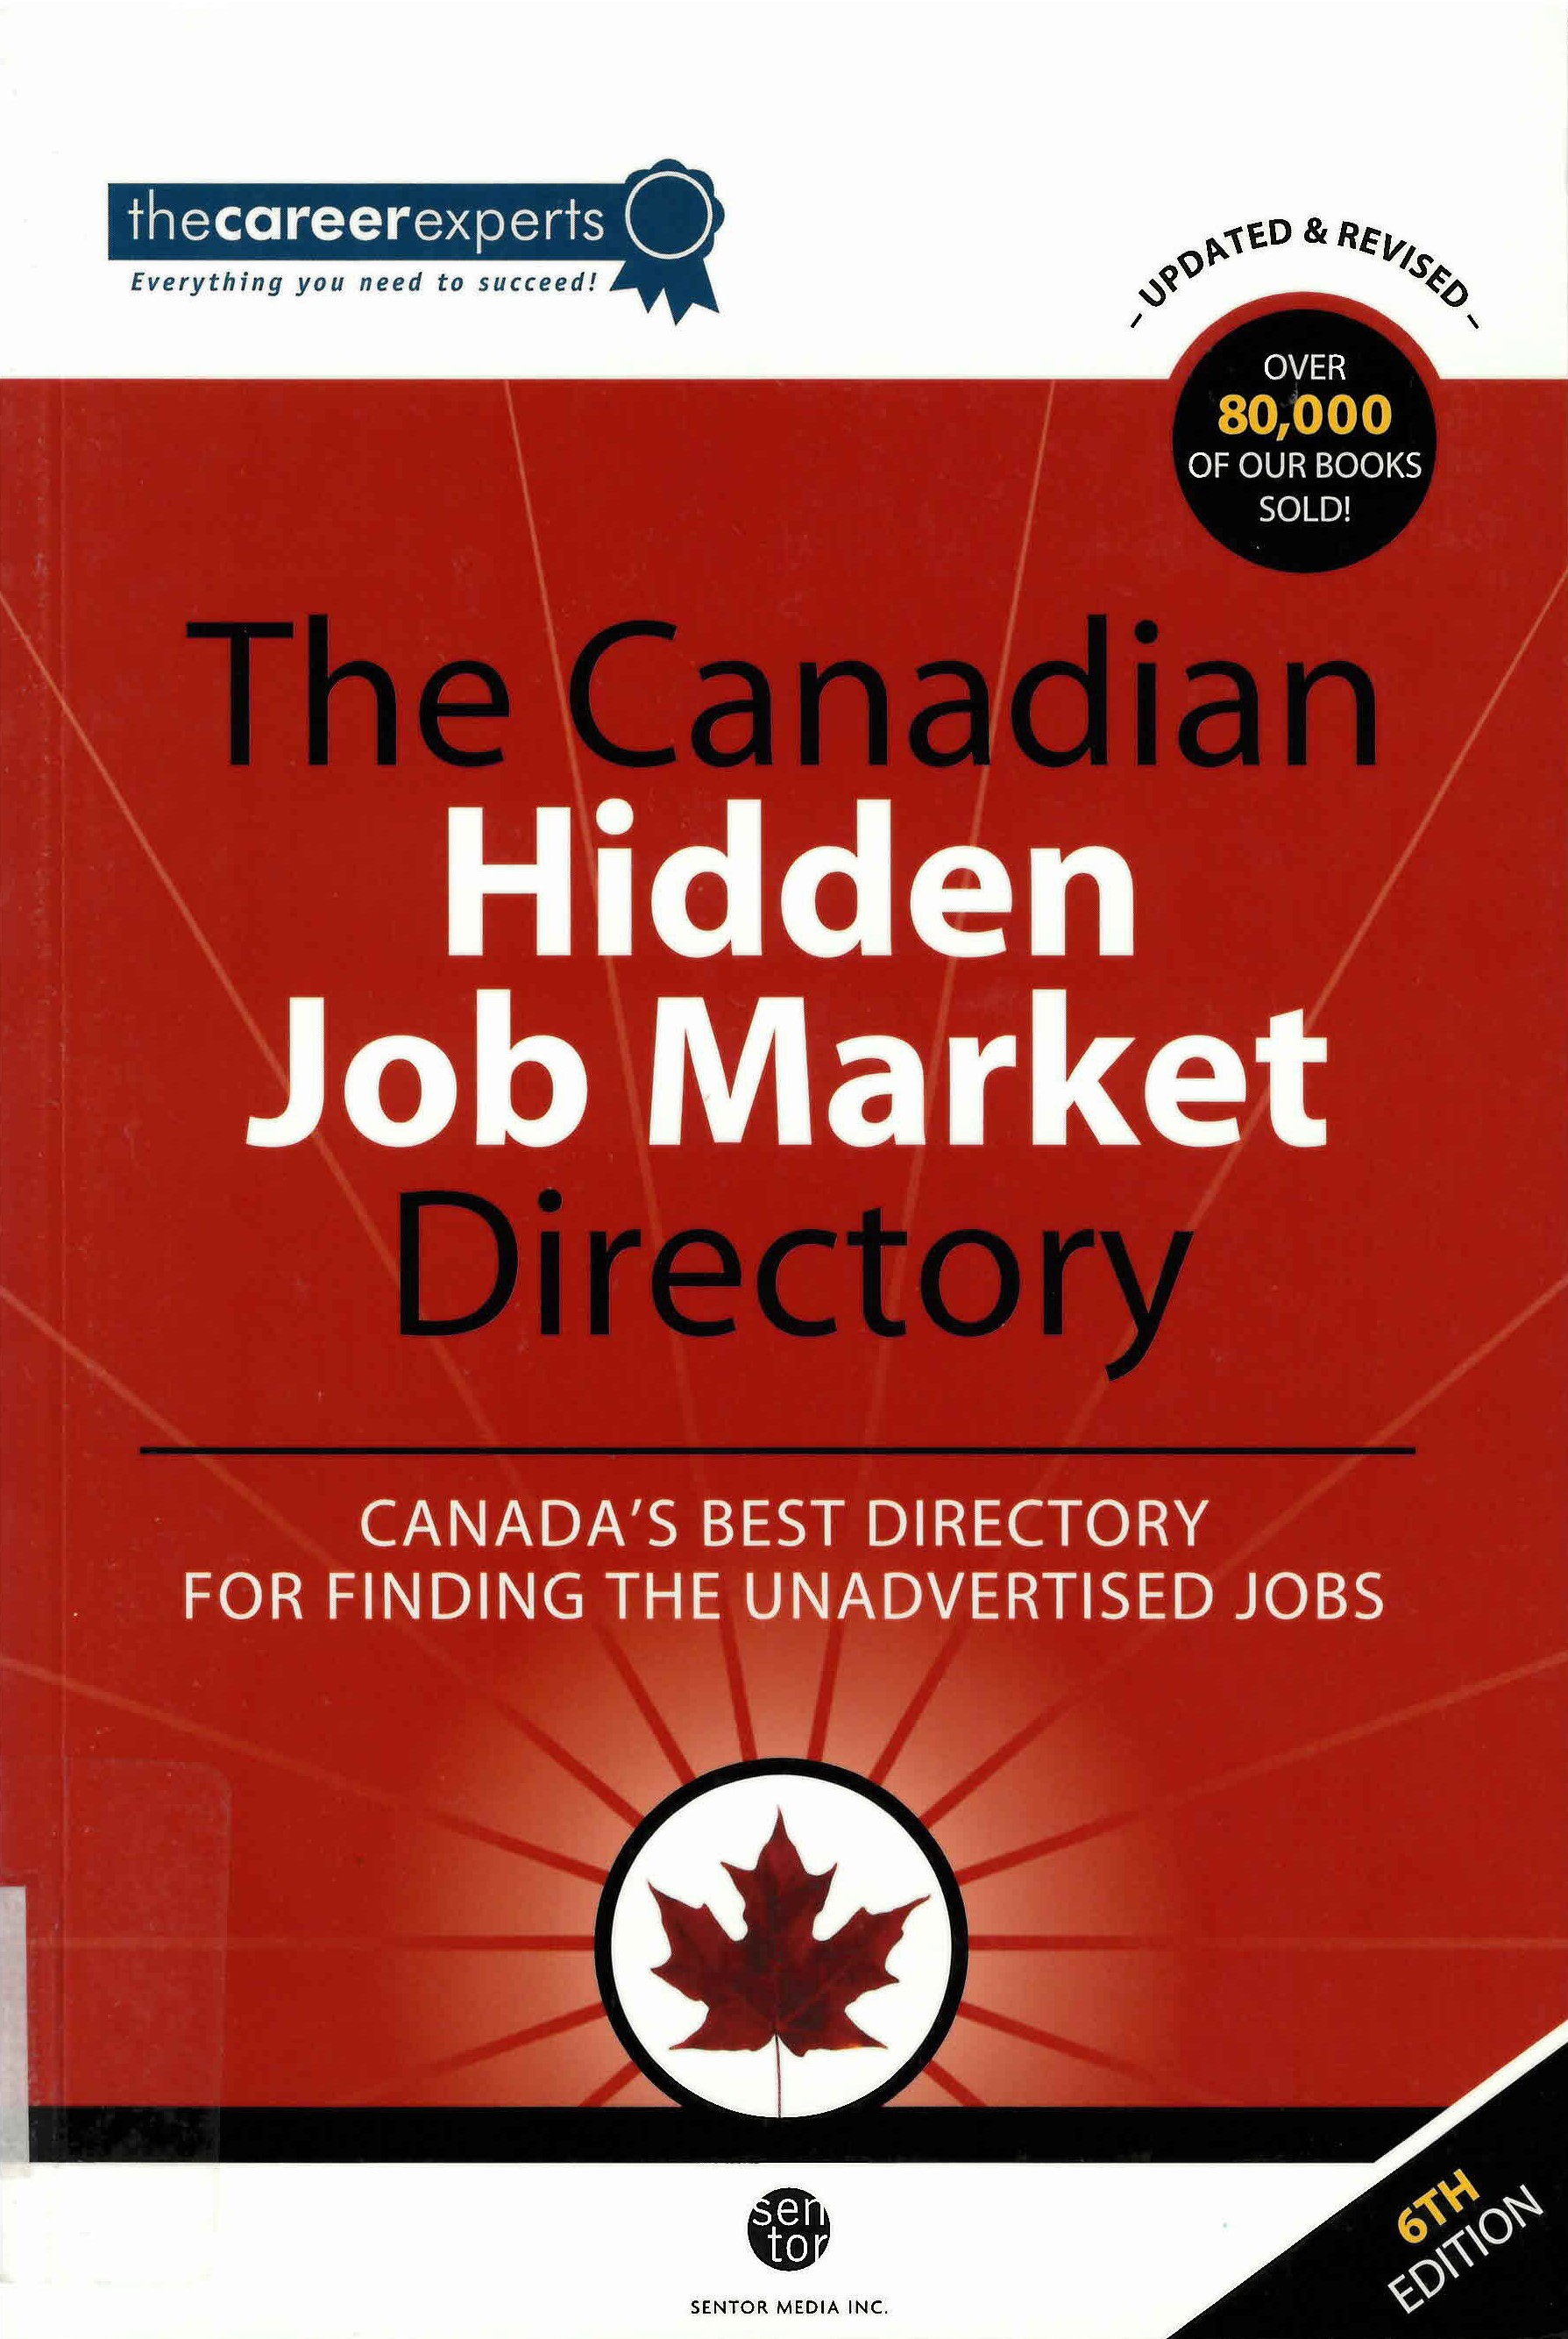 The Canadian hidden job market directory.